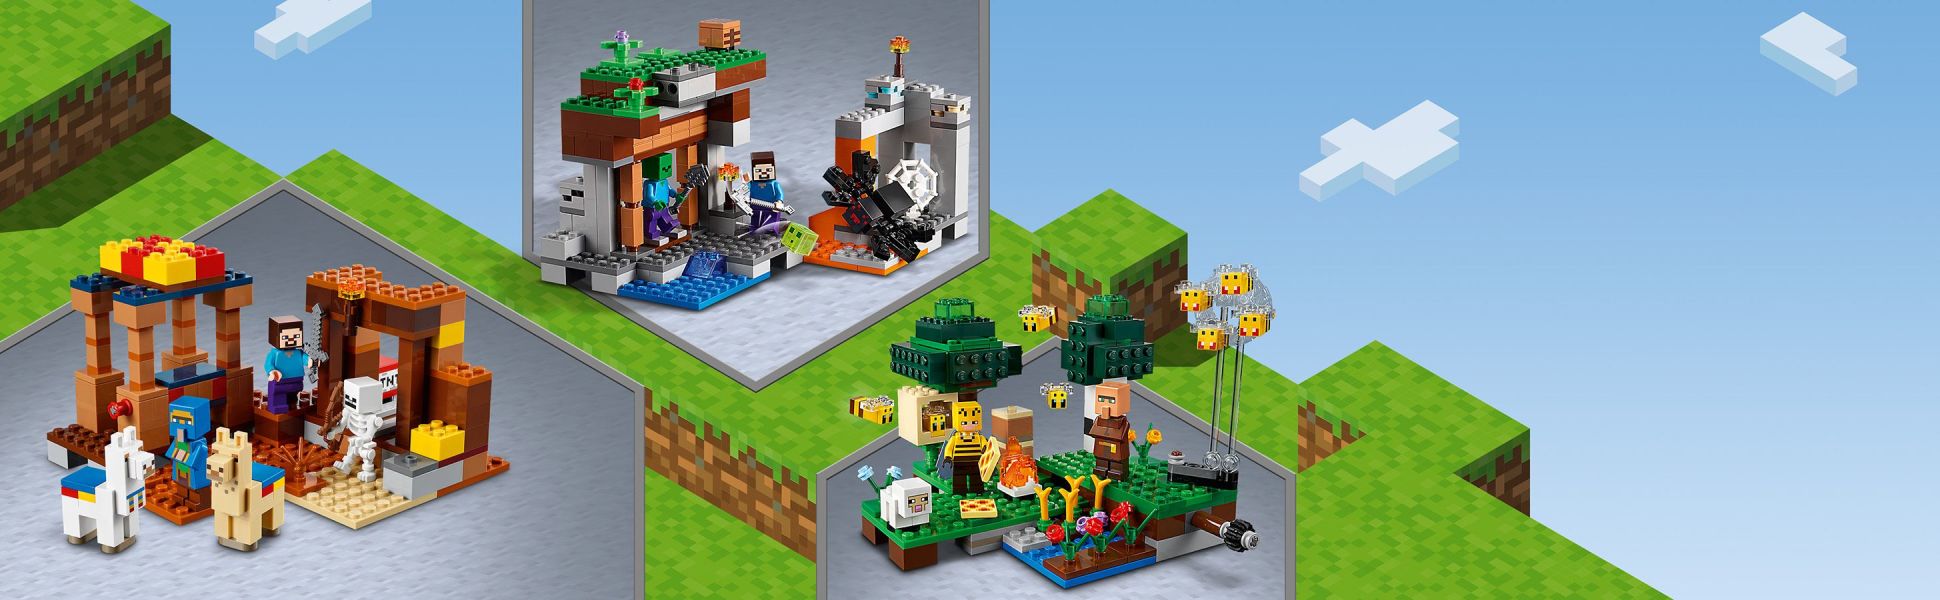 LEGO Minecraft 21170 La maison cochon 